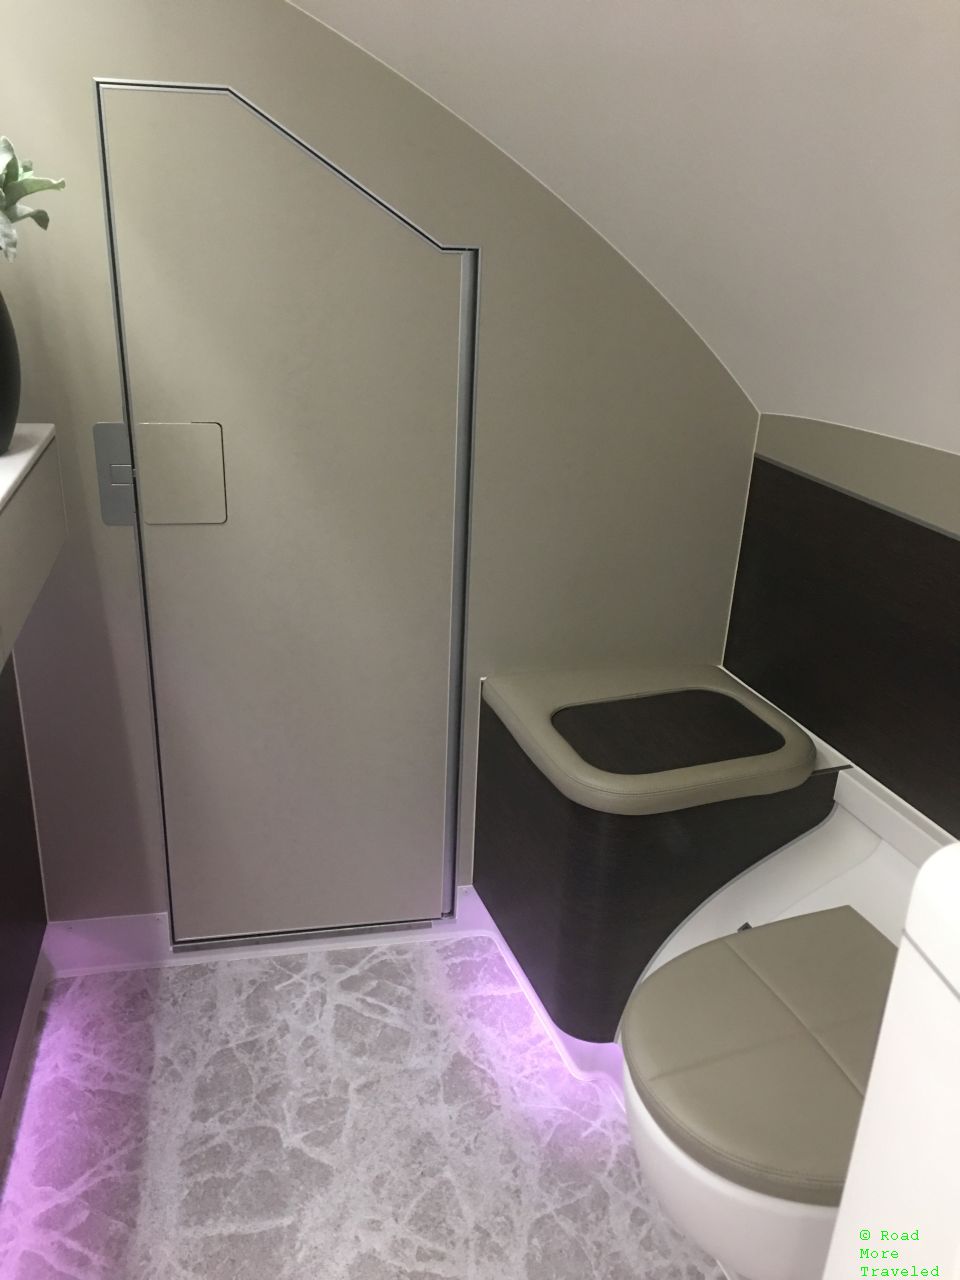 Singapore Airlines A380 Suites Class - lavatory